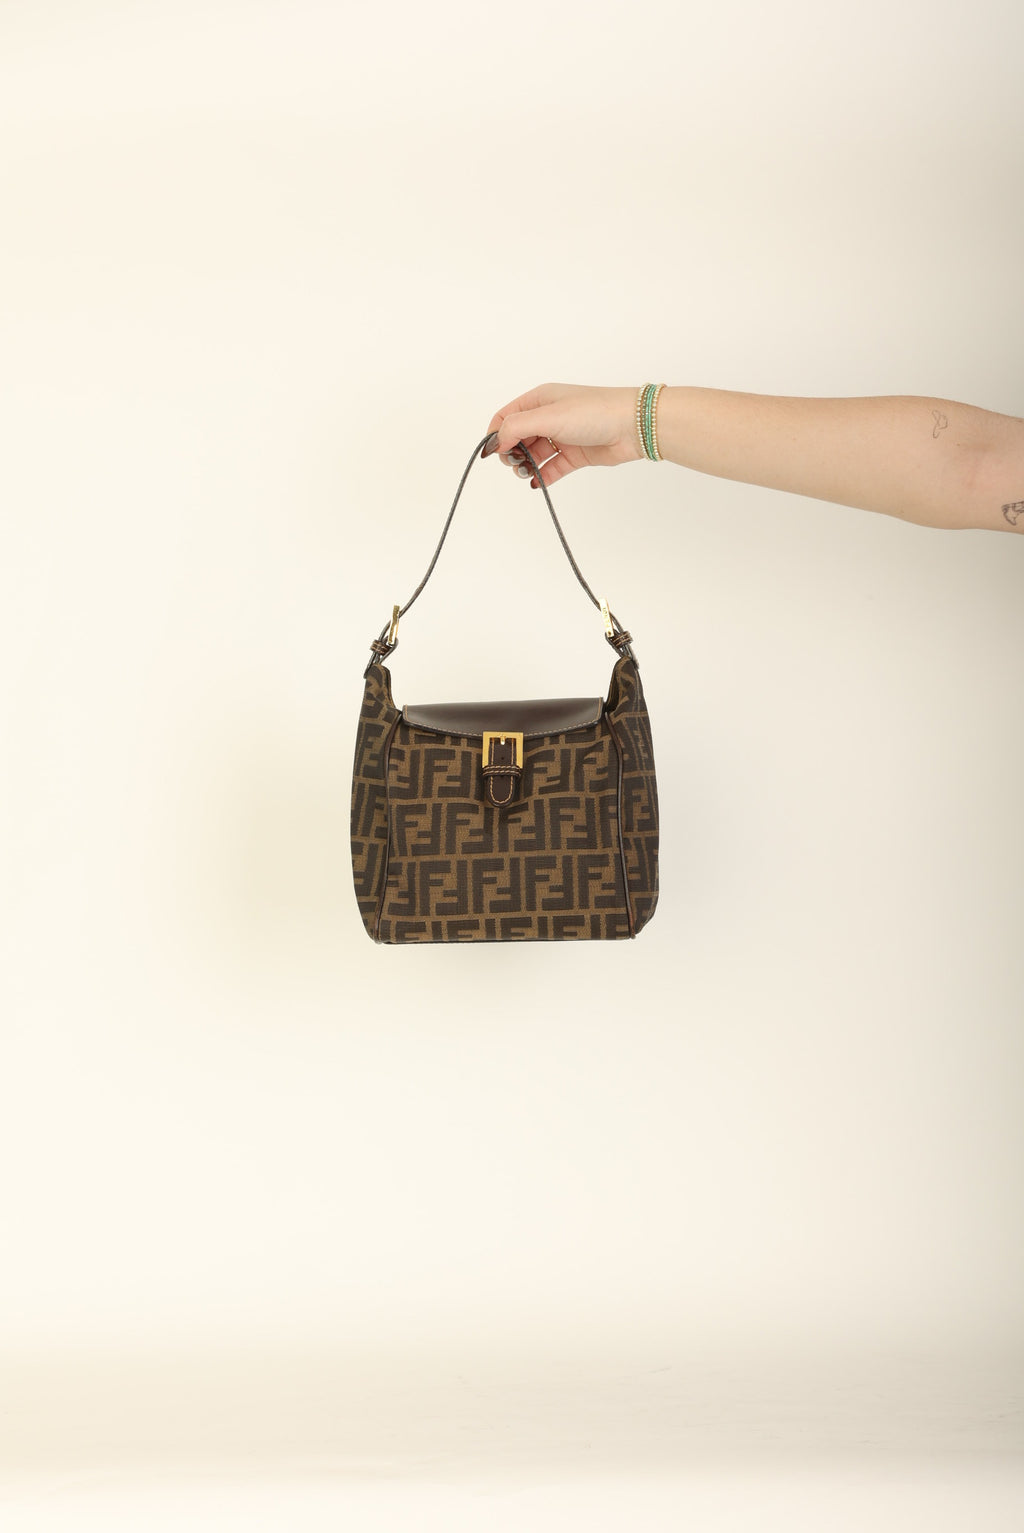 Fendi Pre-owned Women's Leather Clutch Bag